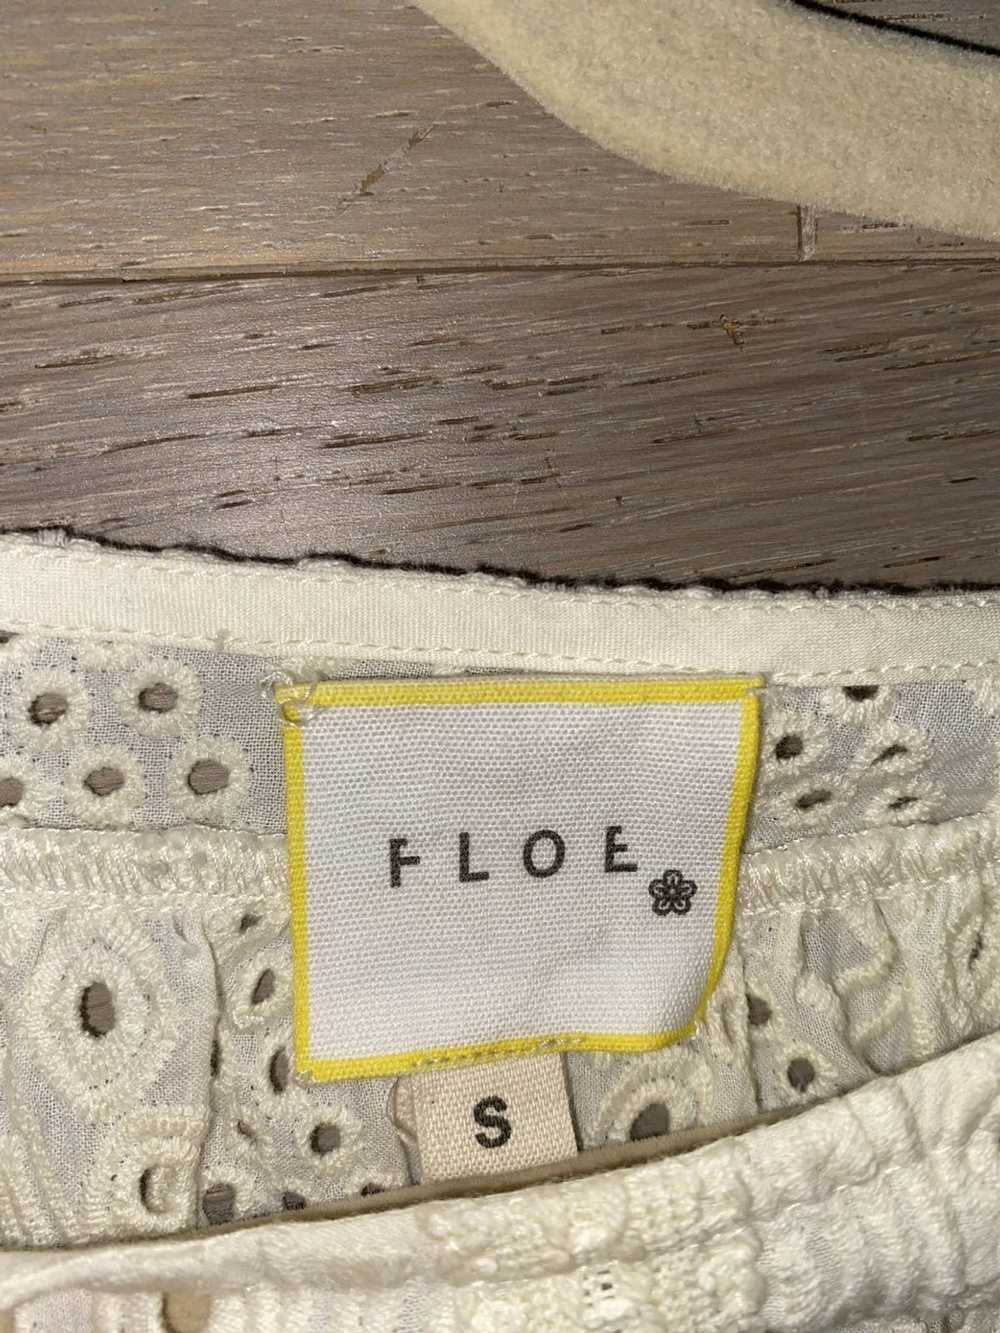 Designer Floe Sheer Blouse - image 6